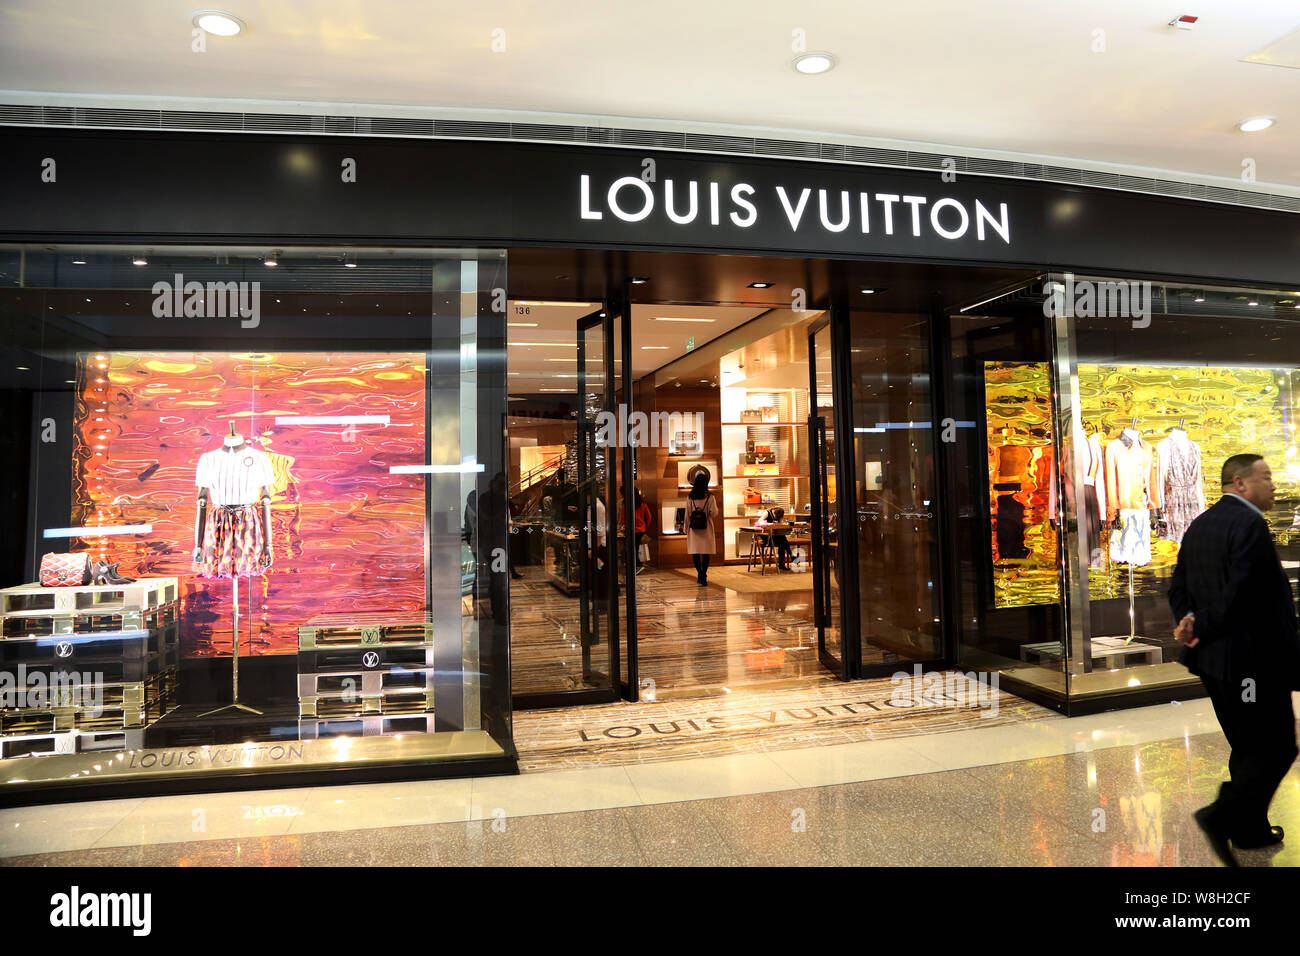 louis vuitton reopens its renovated dubai mall boutique